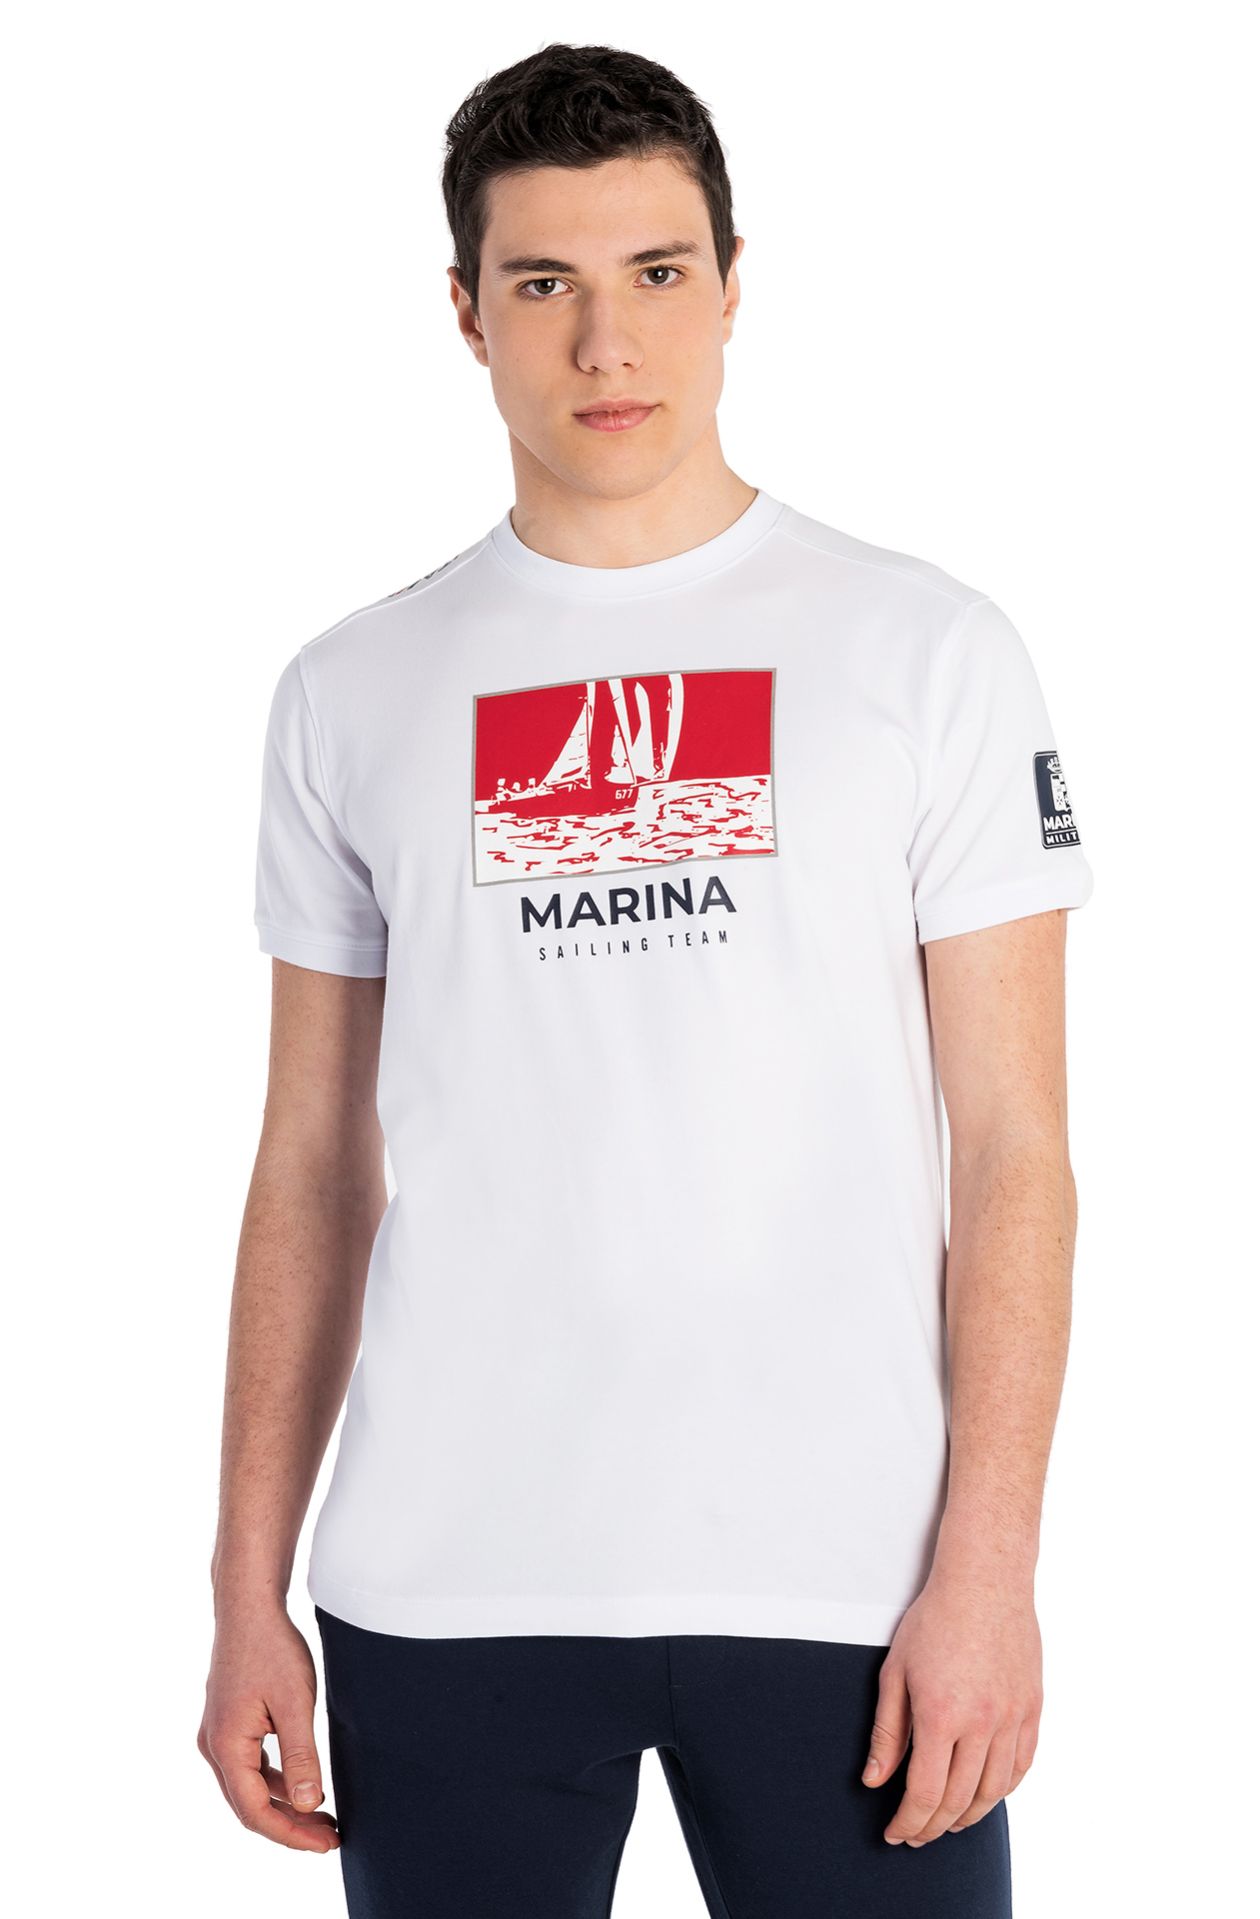 T-shirt Sailing Team